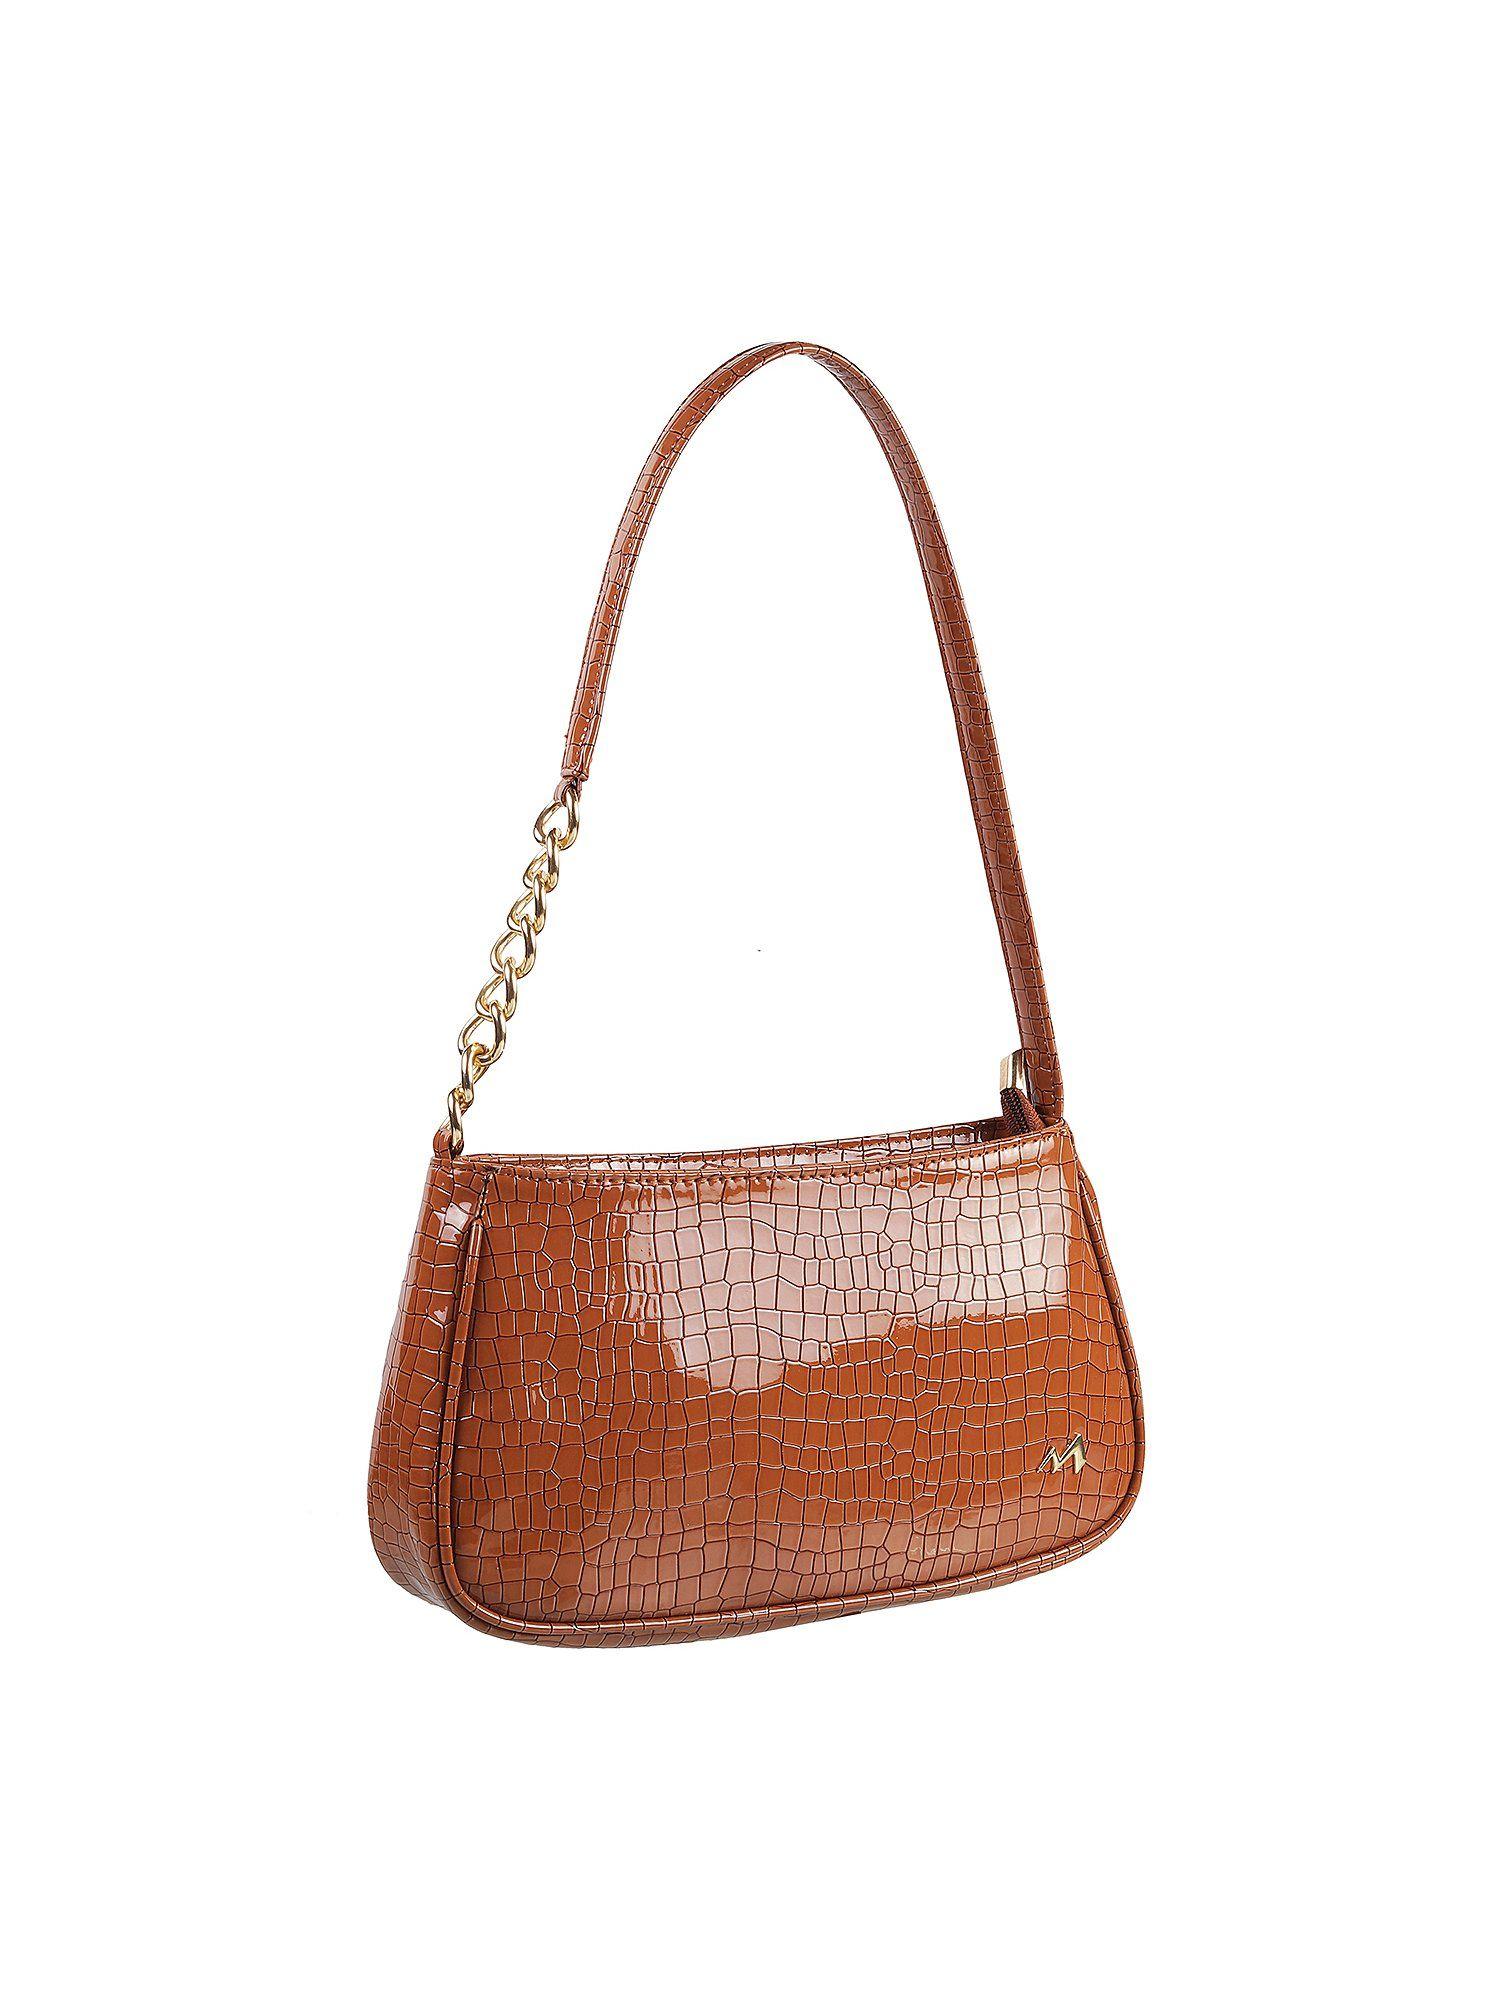 textured tan handbag